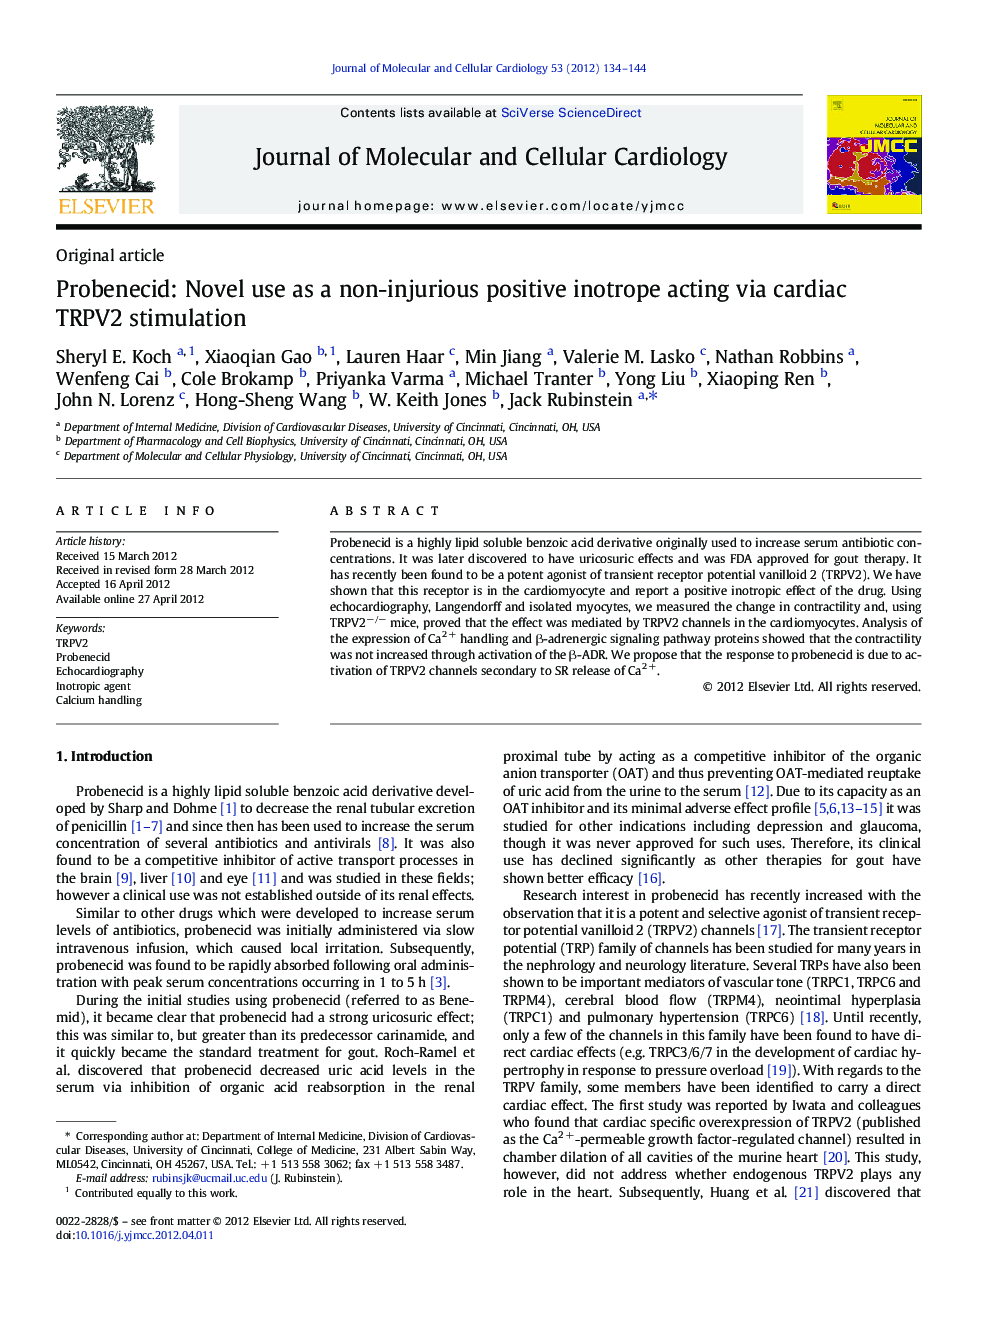 Probenecid: Novel use as a non-injurious positive inotrope acting via cardiac TRPV2 stimulation